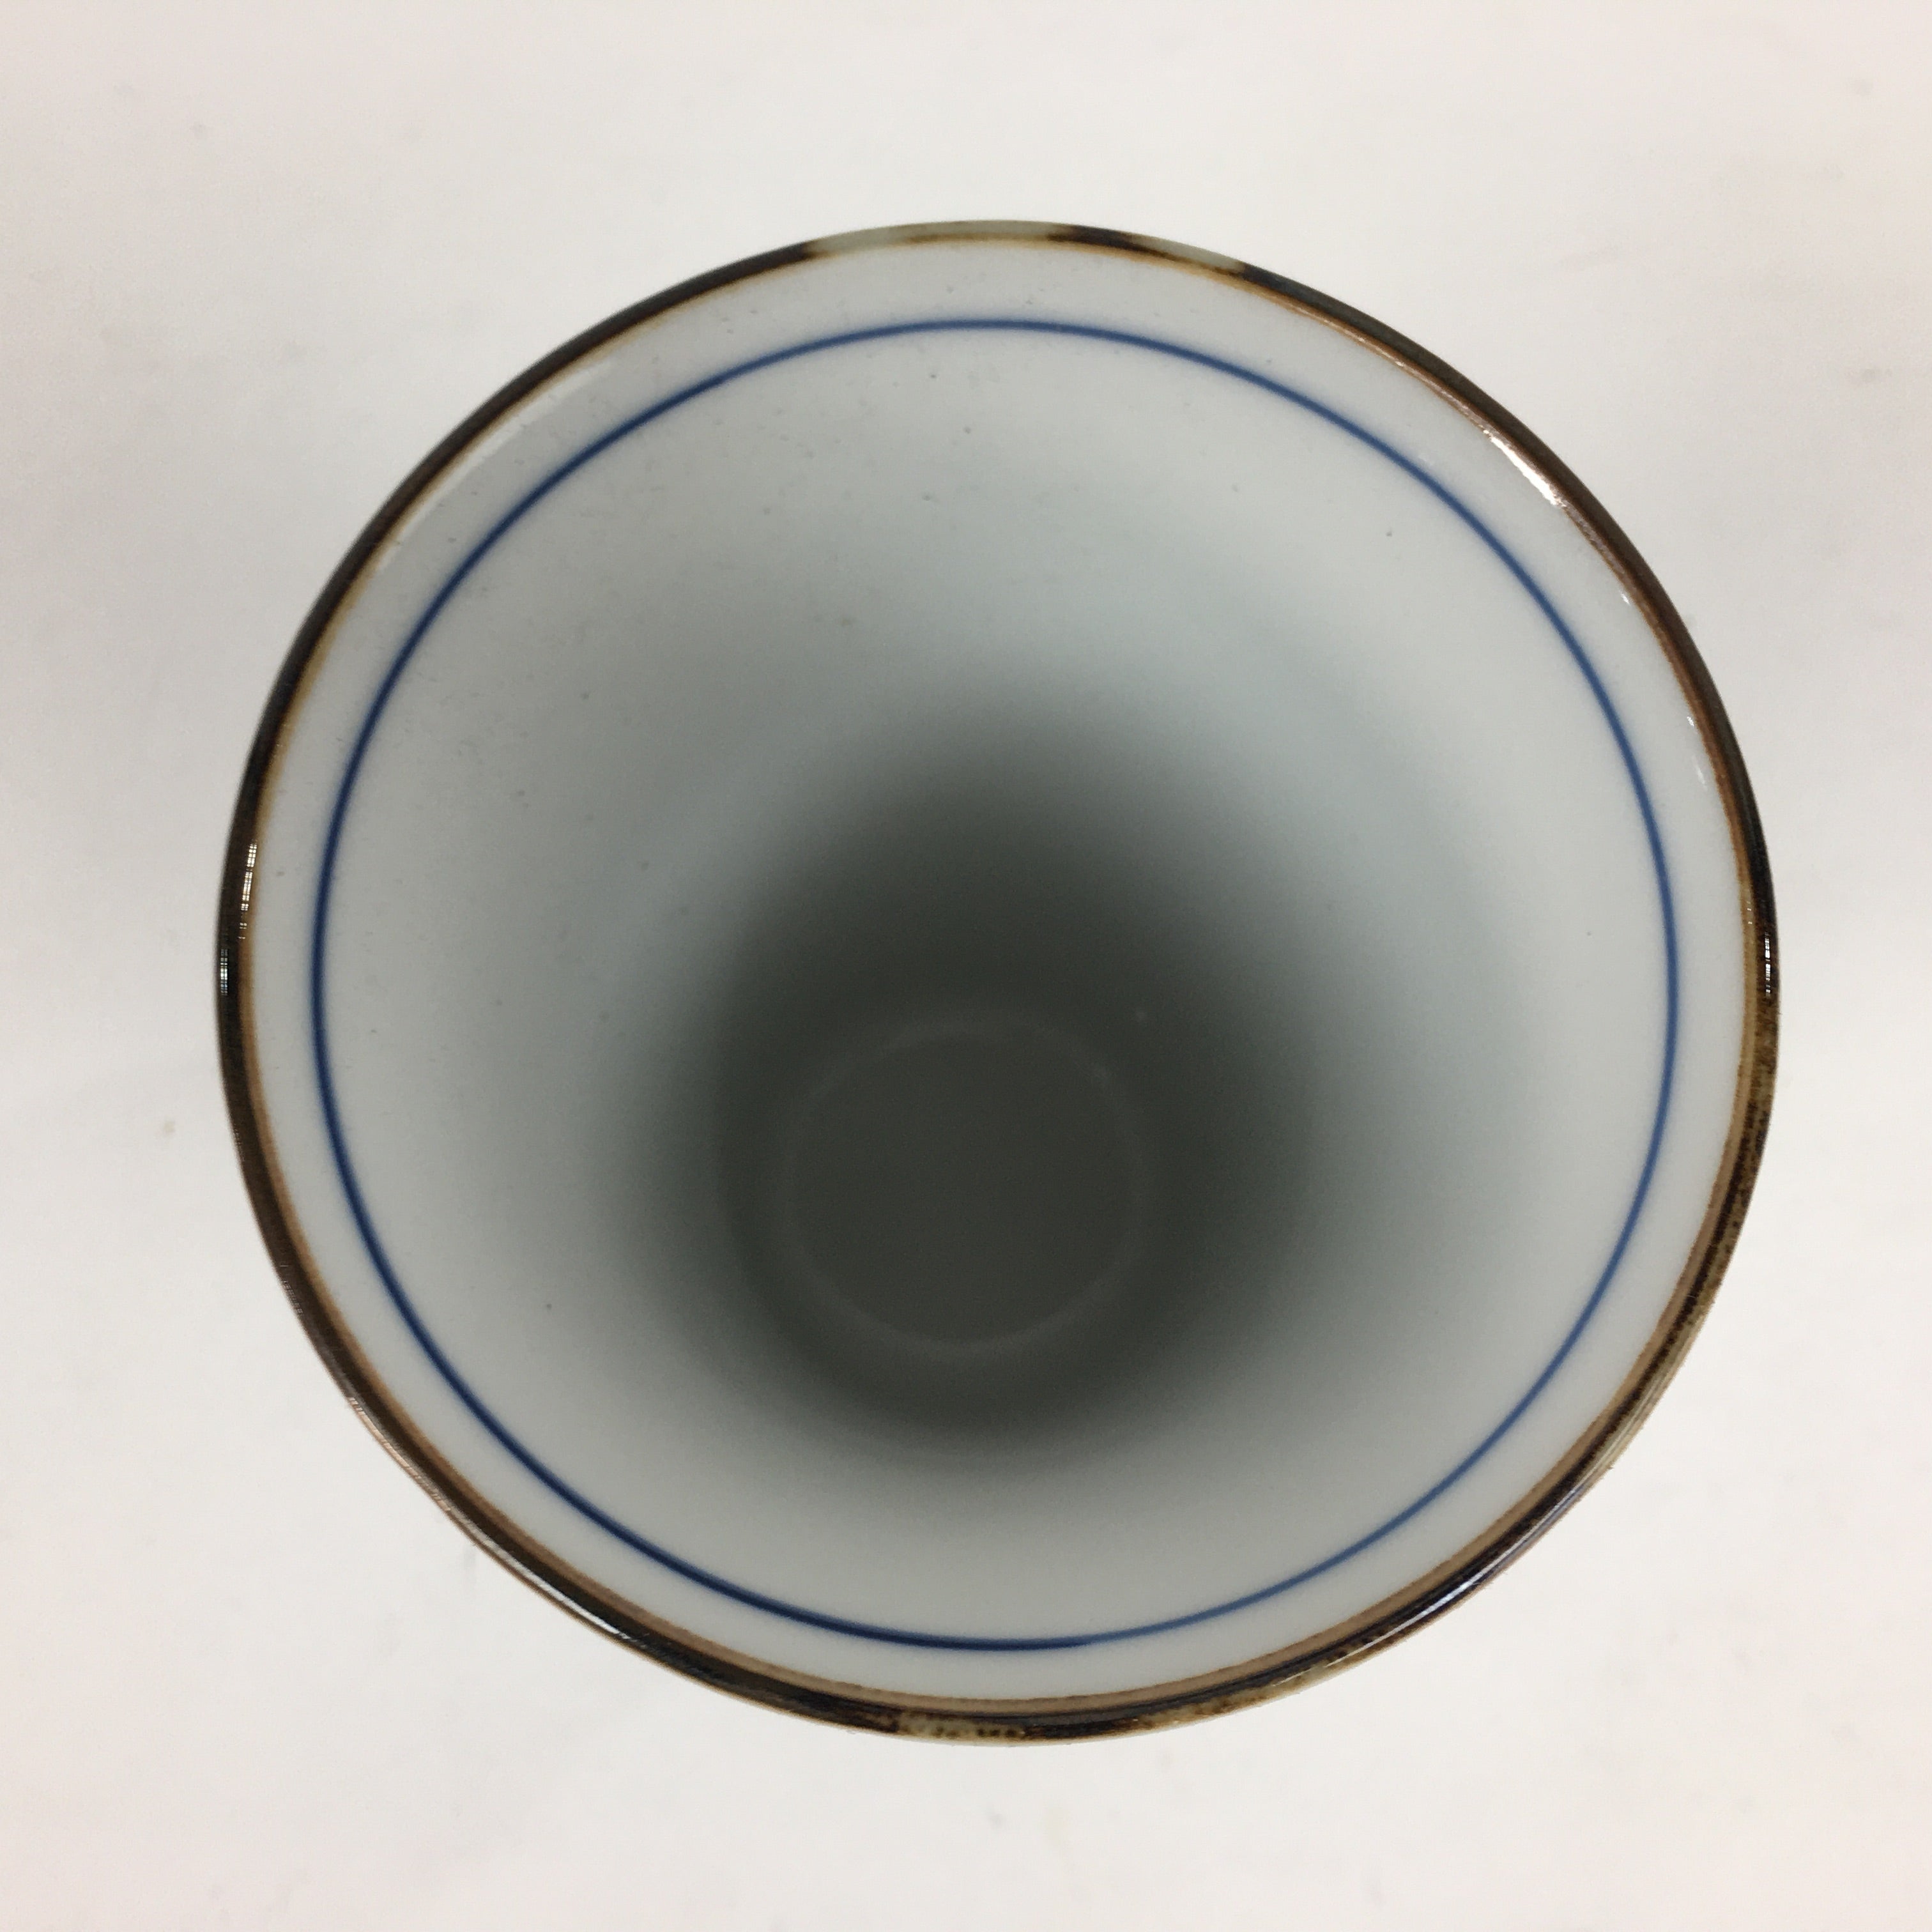 Japanese Porcelain Mino Ware Teacup Vtg Red Akae Blue Yunomi Sencha TC278